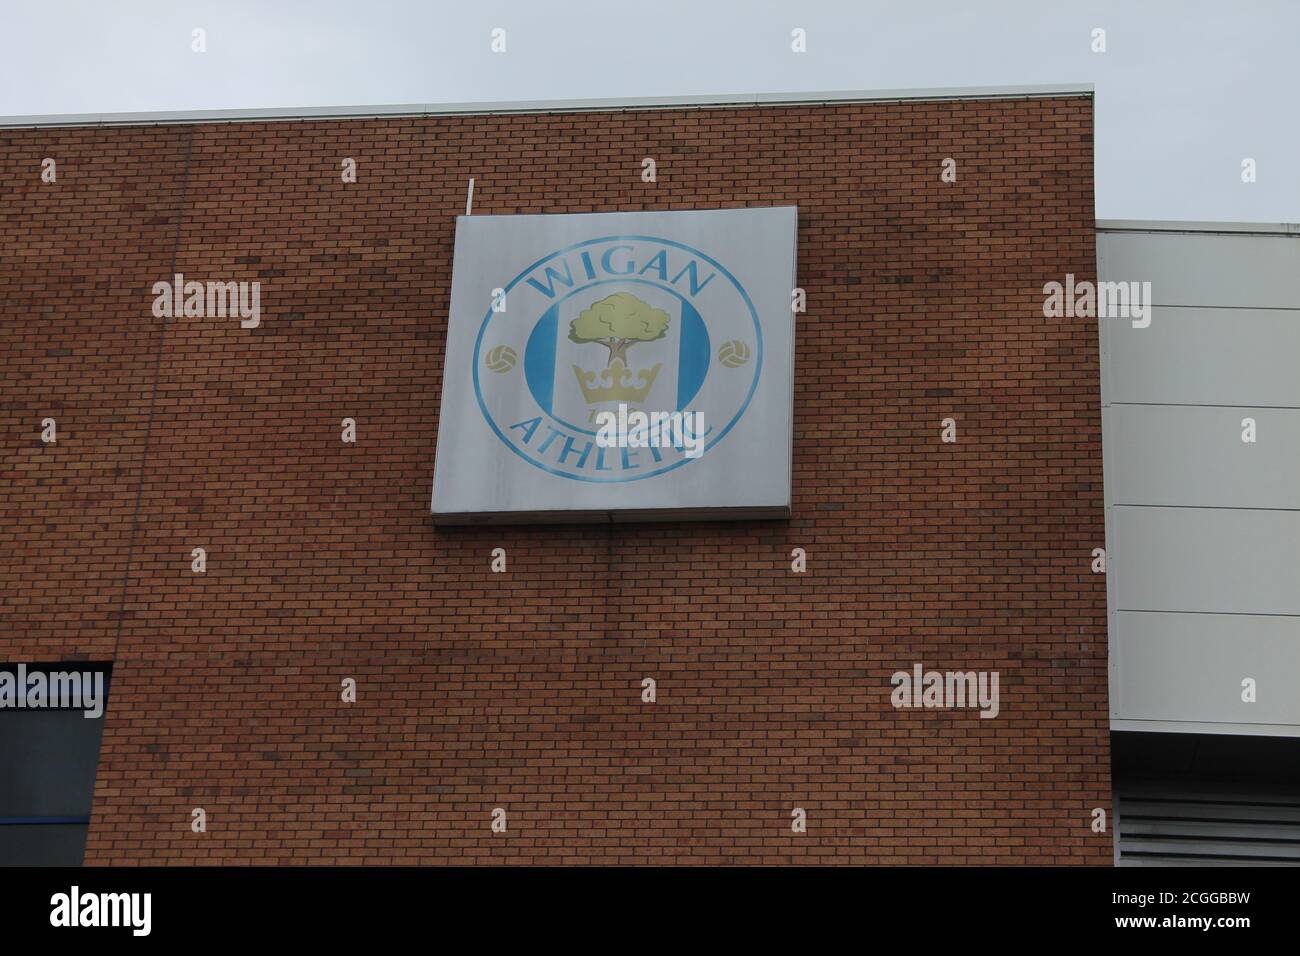 Wigan Athletic logo at DW Stadium in Wigan, England Stock Photo